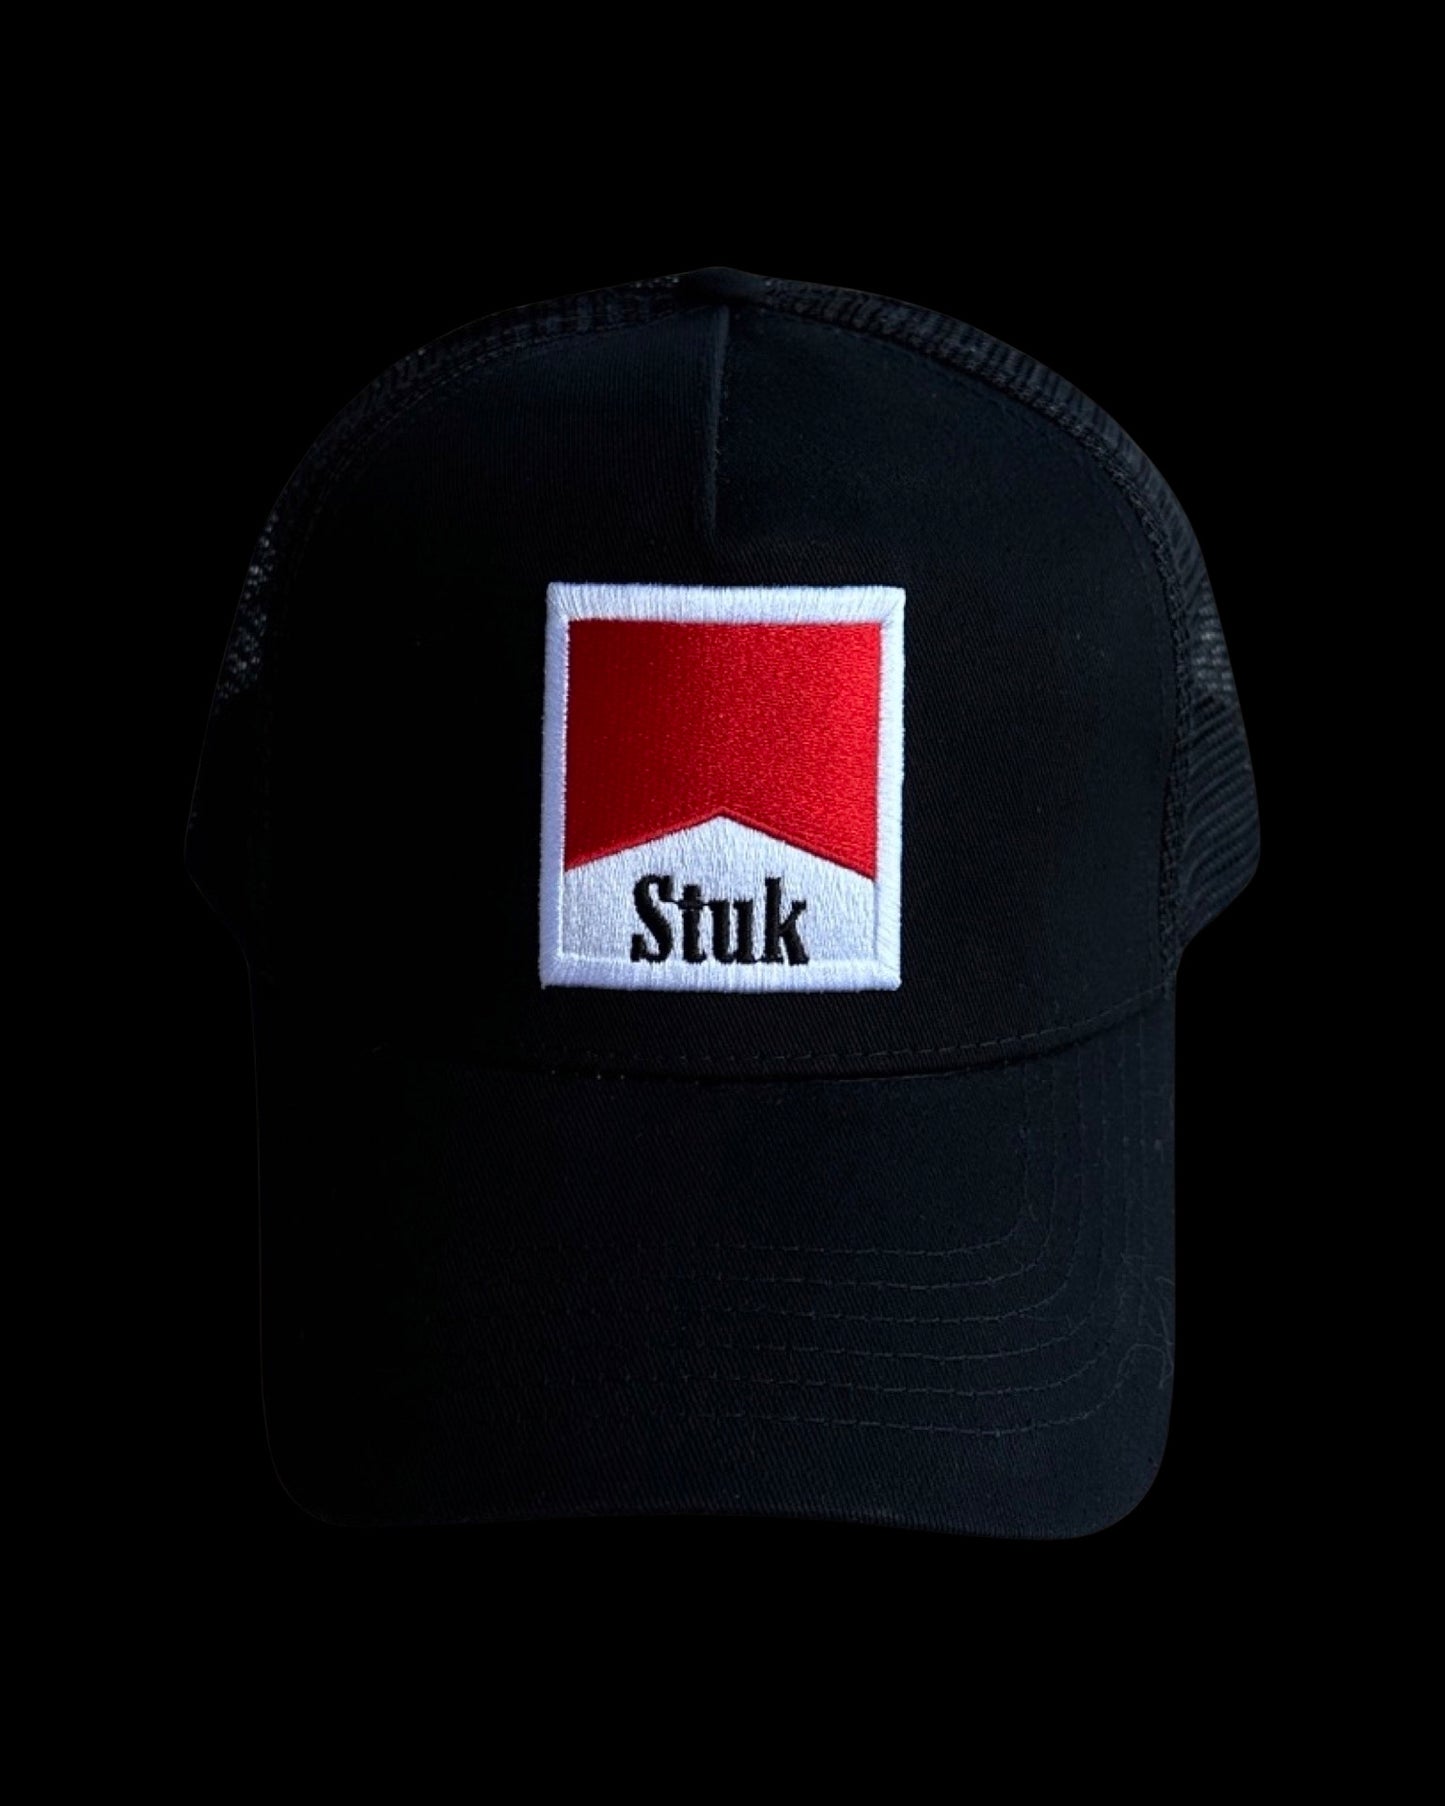 Stuk Trucker Caps // Black